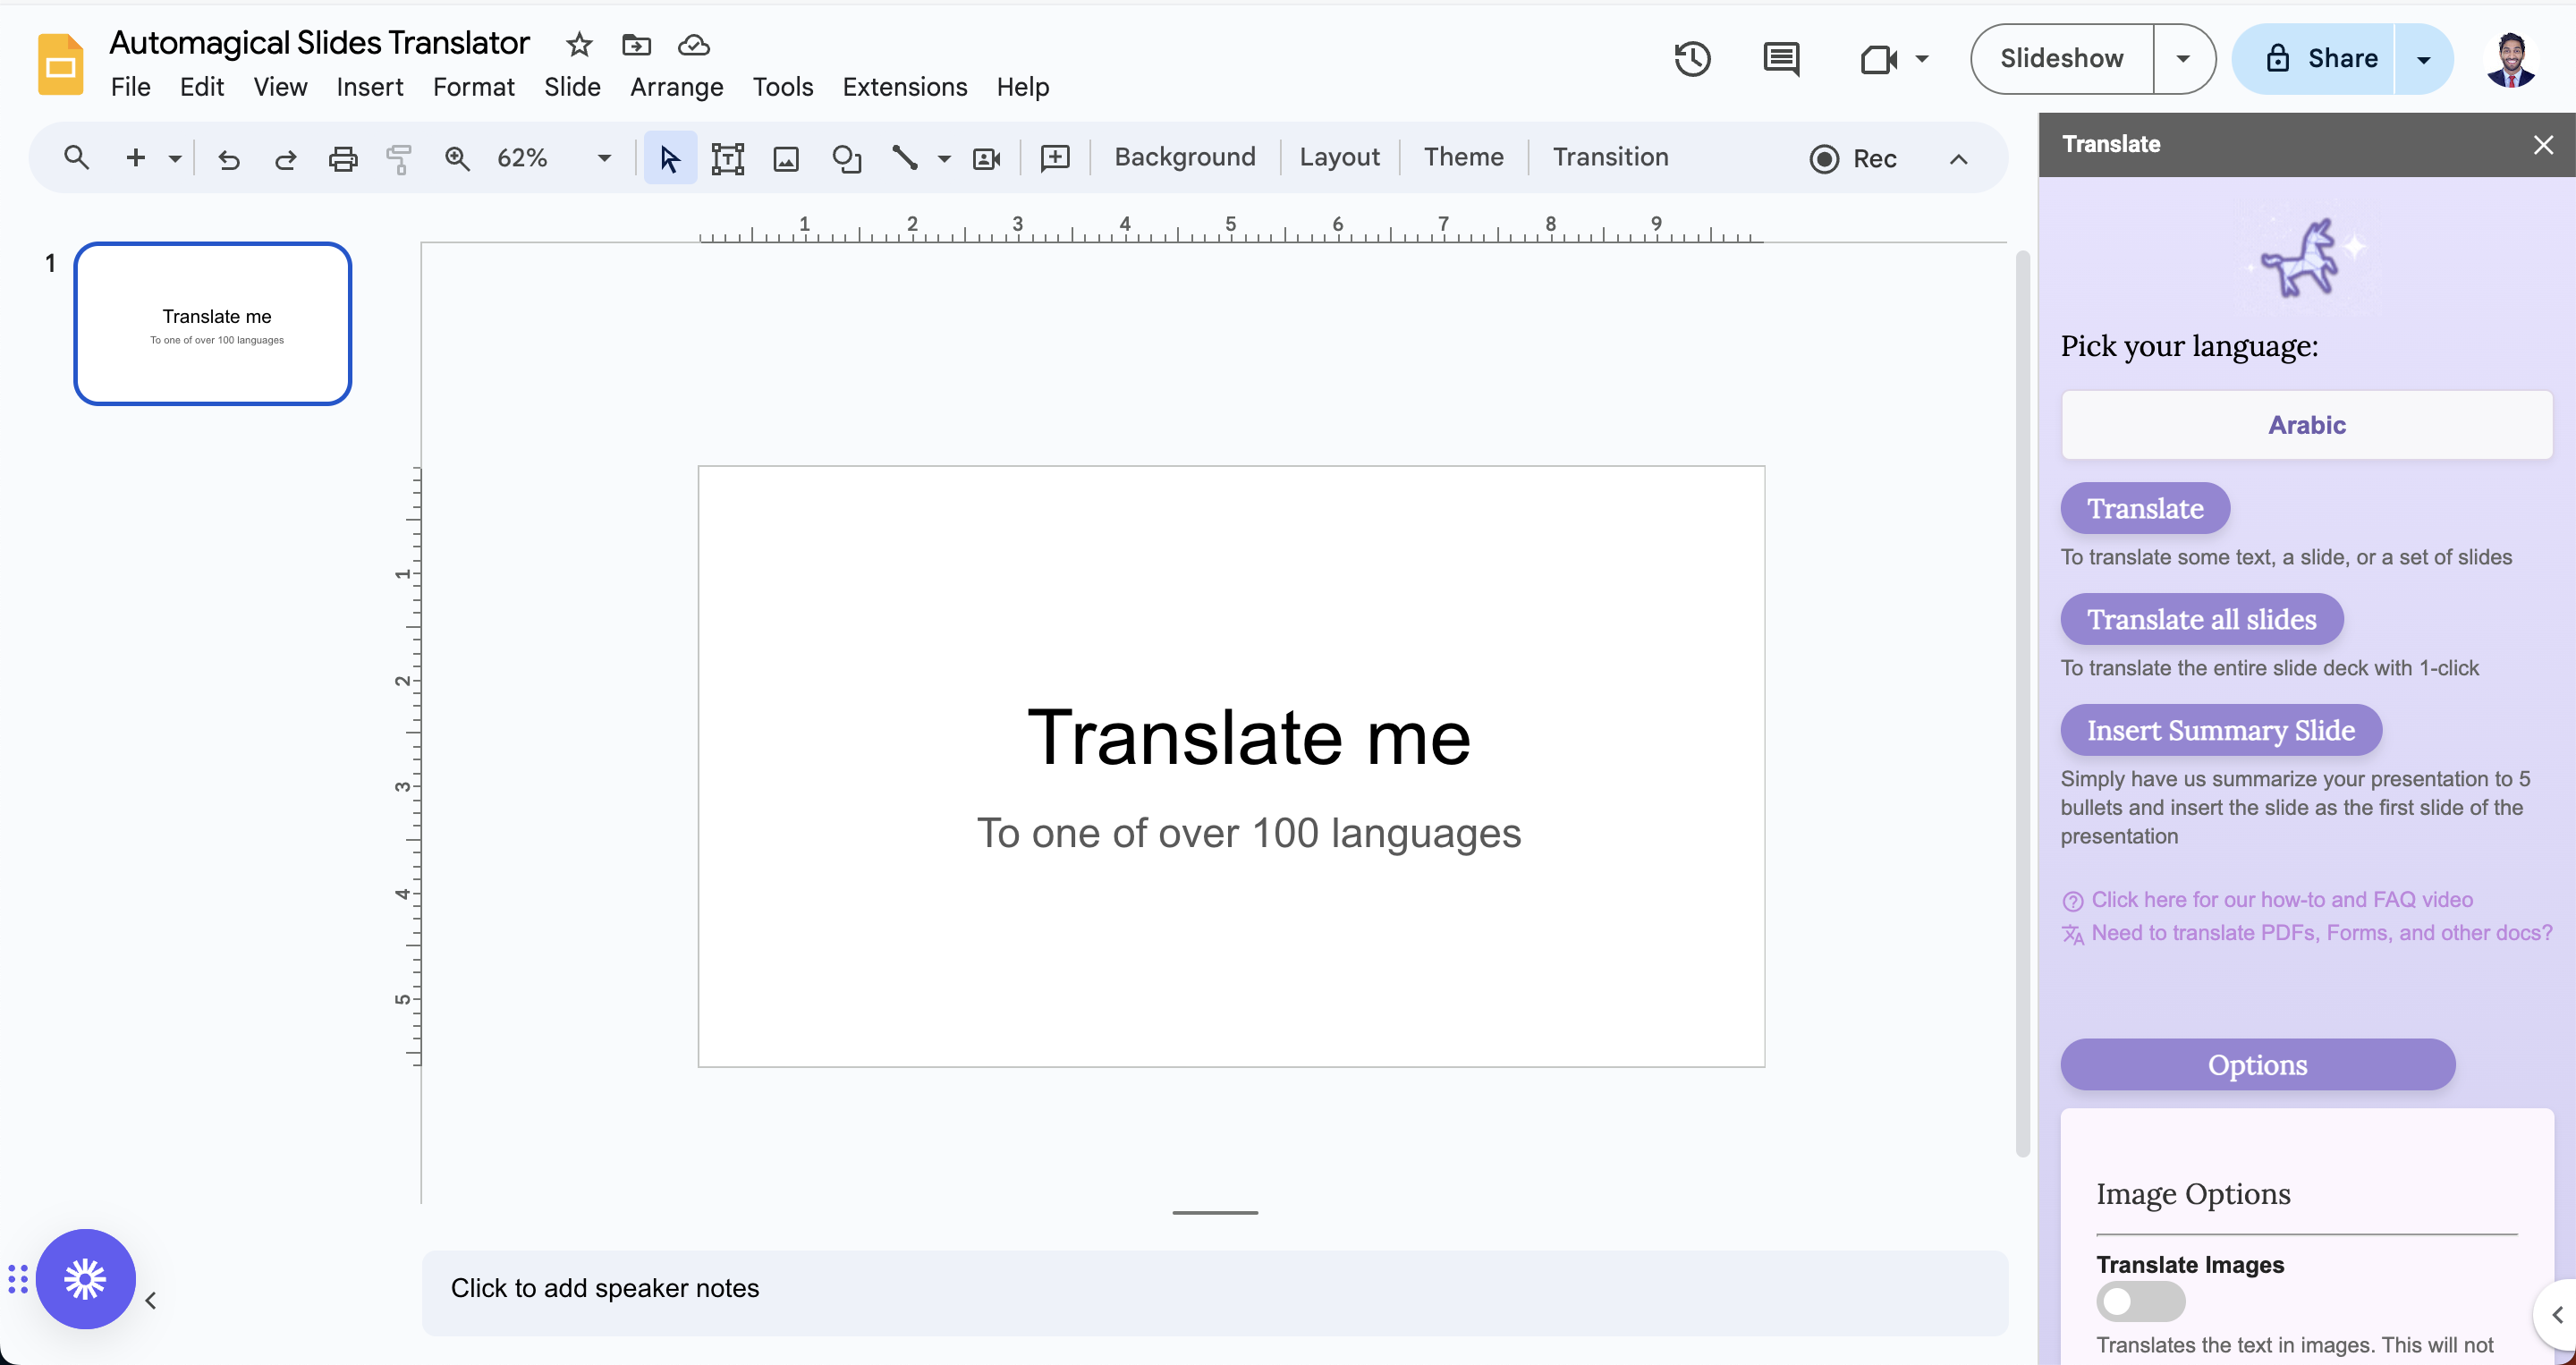 Slides Translator by Automagical Apps Home Screen in Google Slides